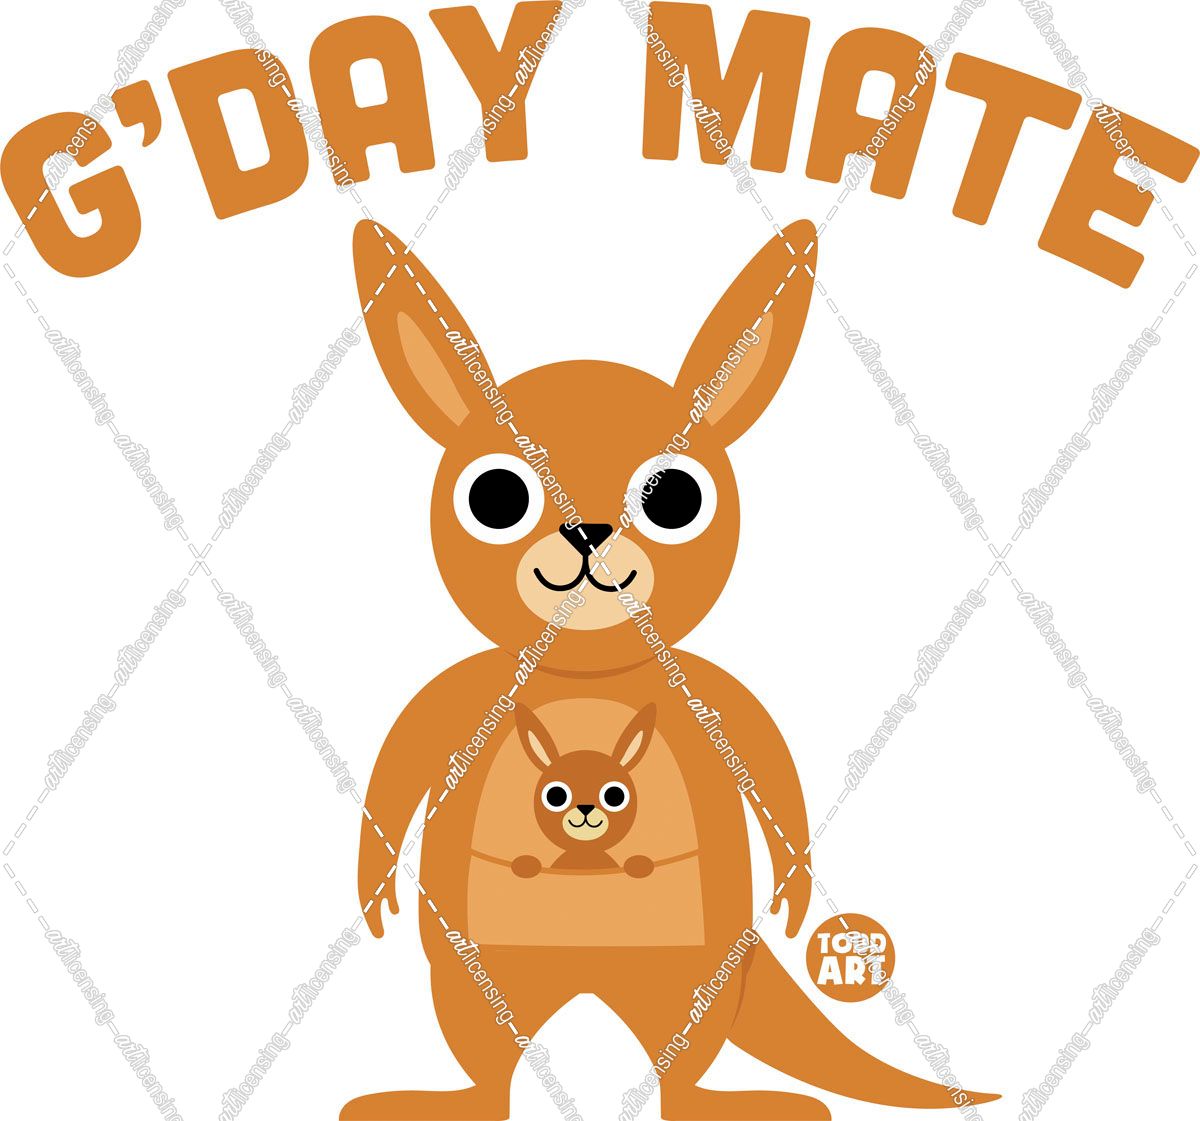 G’day Mate Kangaroo